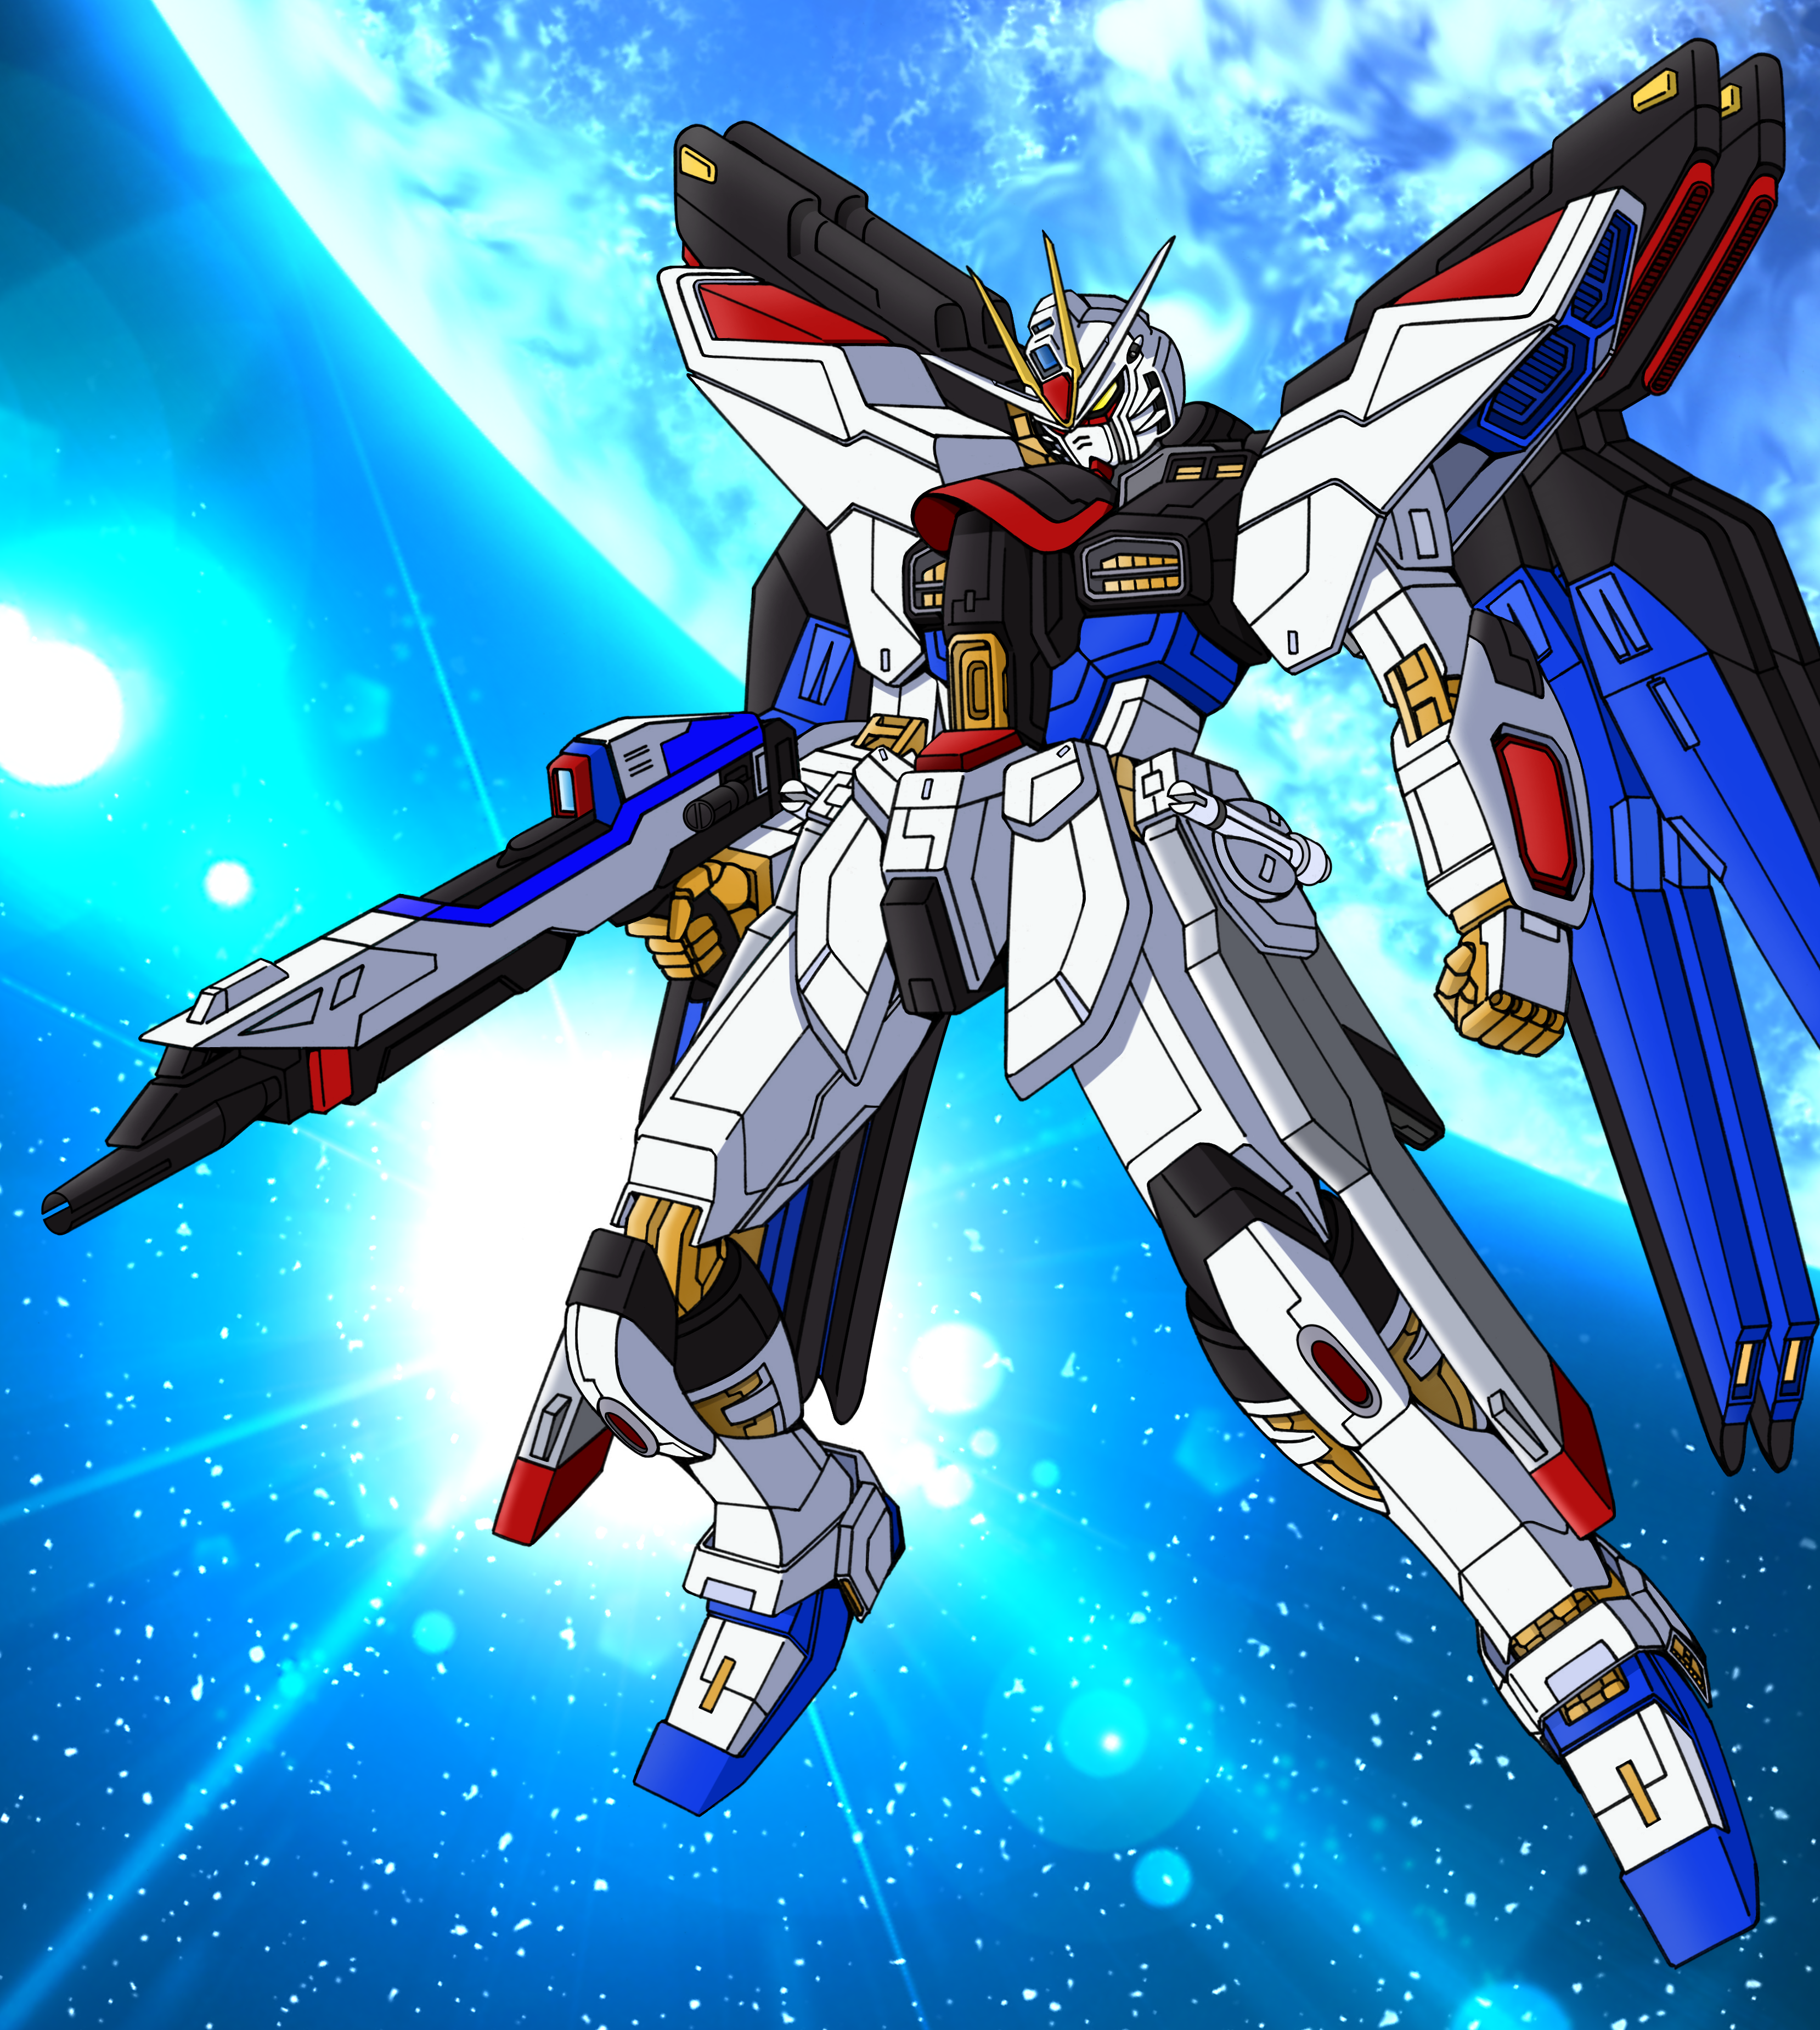 Gundam: Requiem for Vengeance Is A New, Unreal Engine 5-made Gundam Show